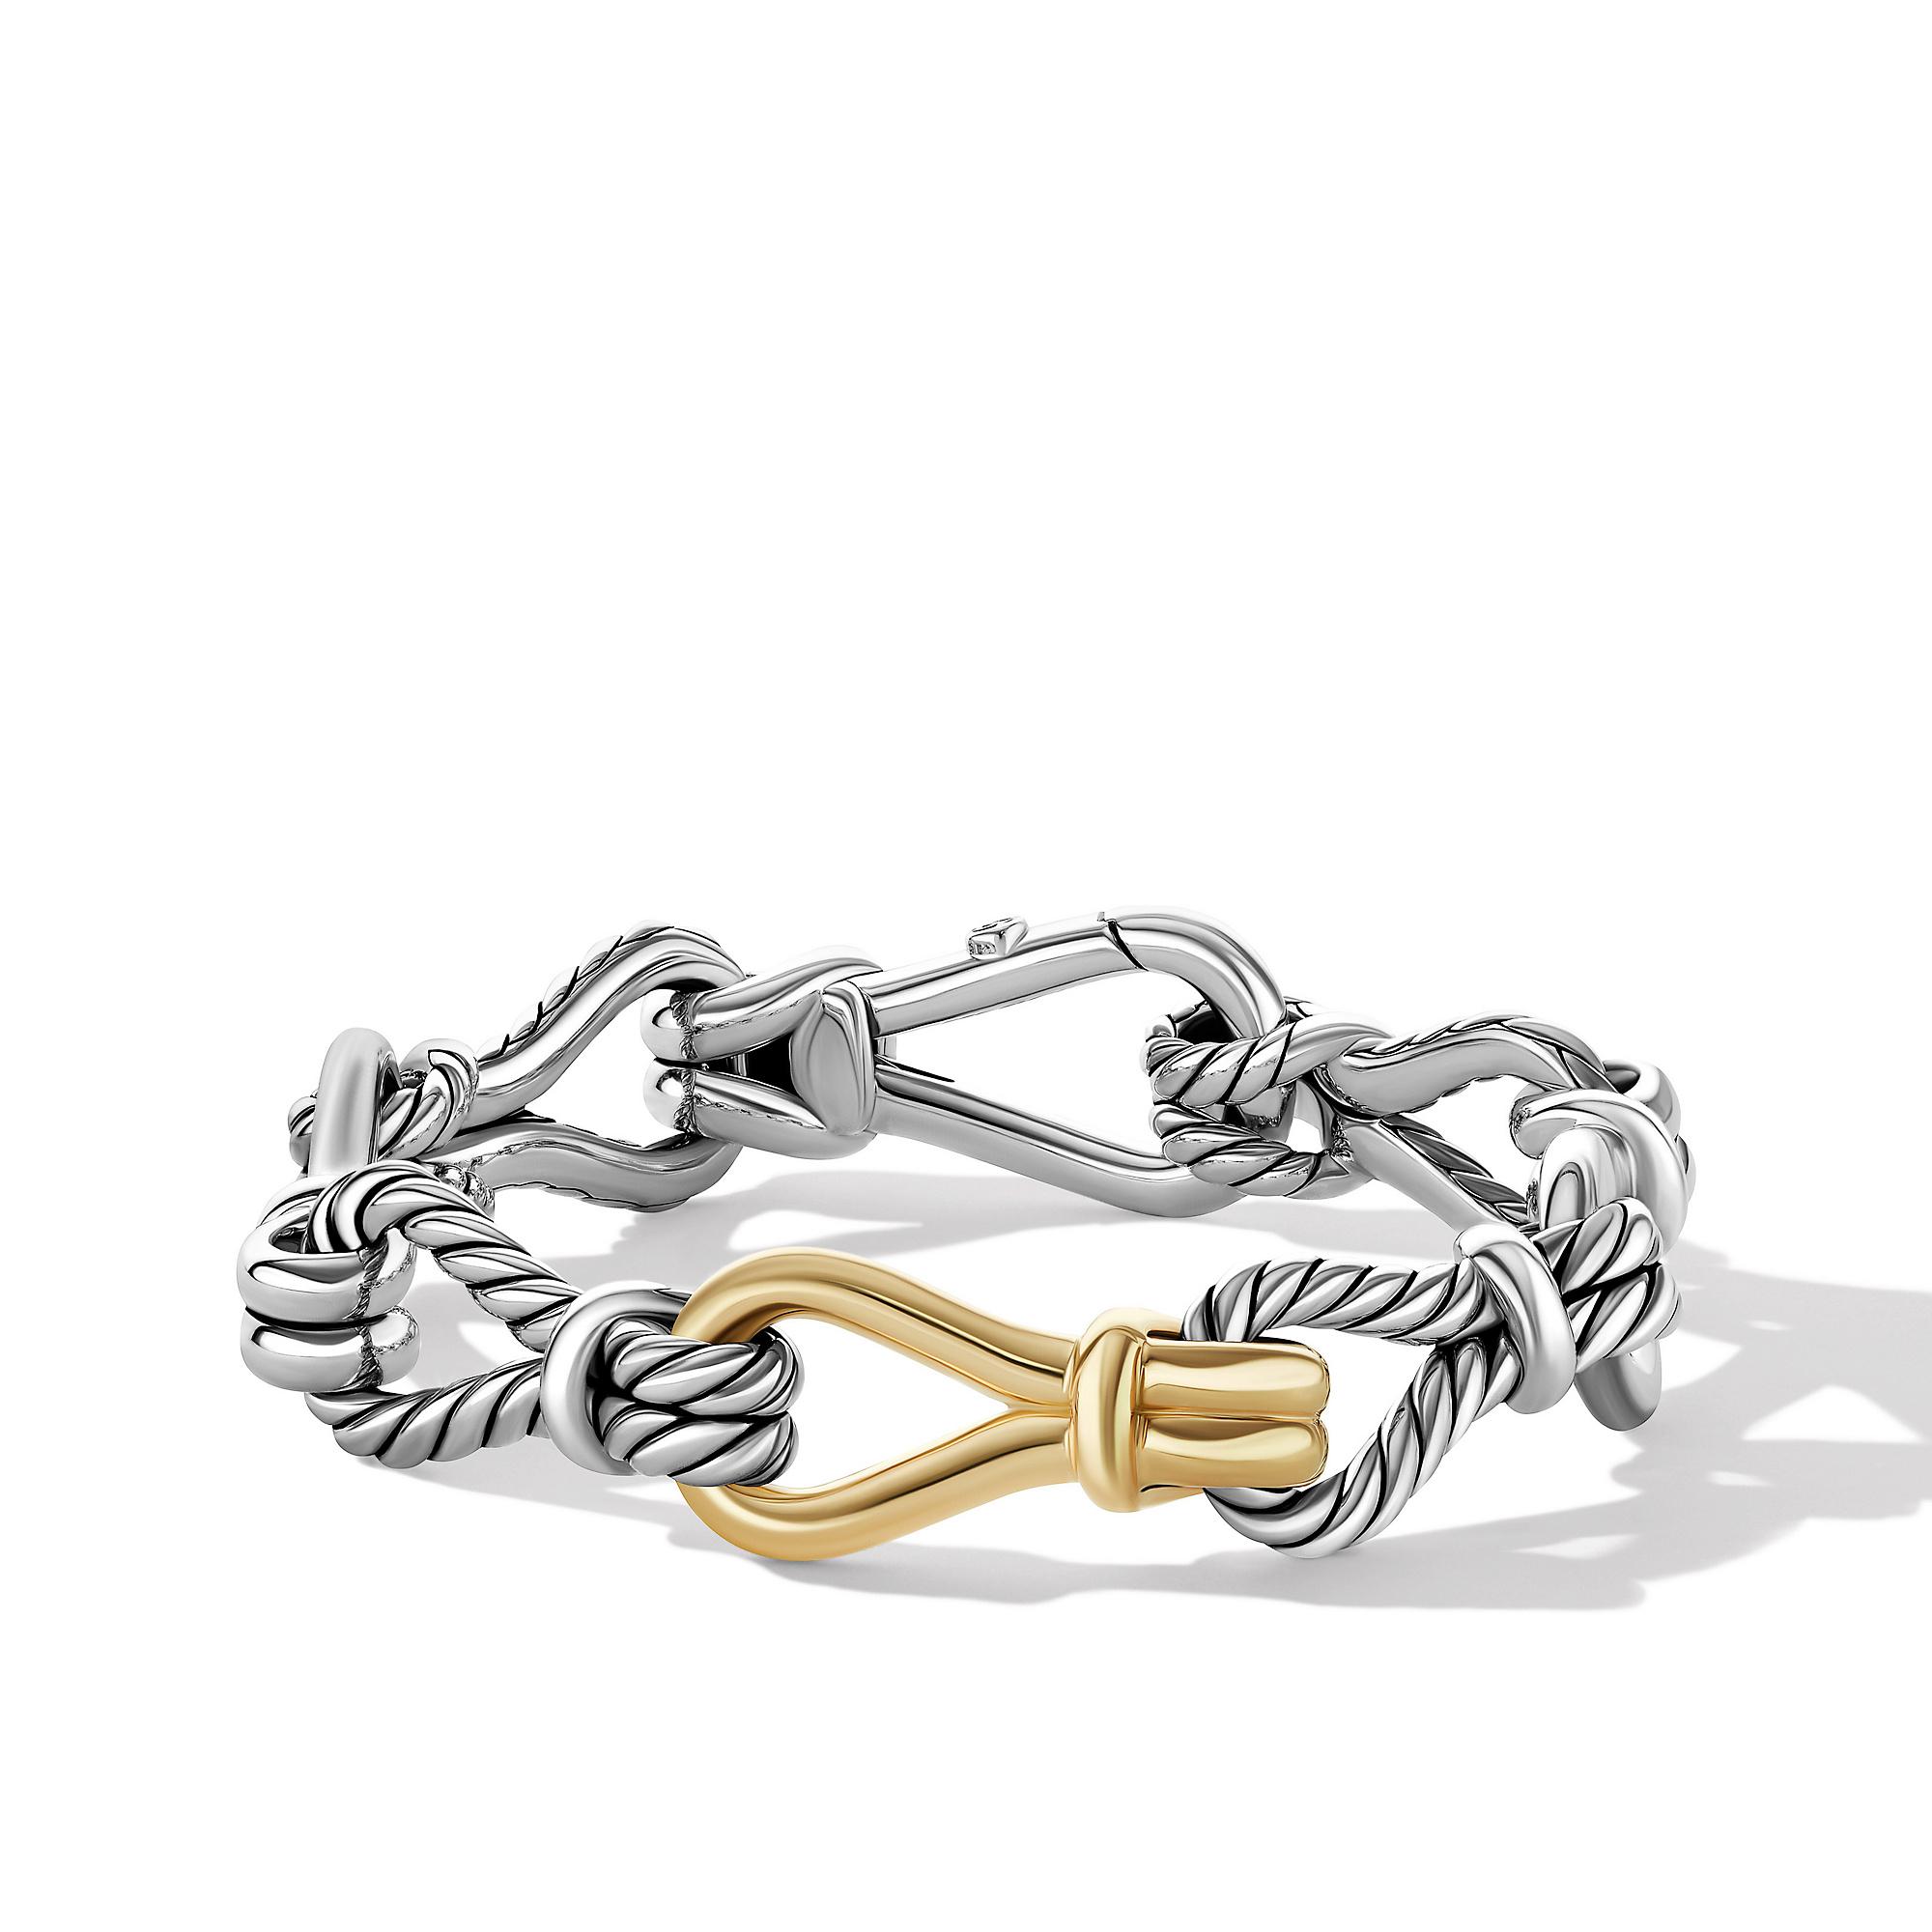 David Yurman Thoroughbred Loop Chain Bracelet with 18k Yellow Gold